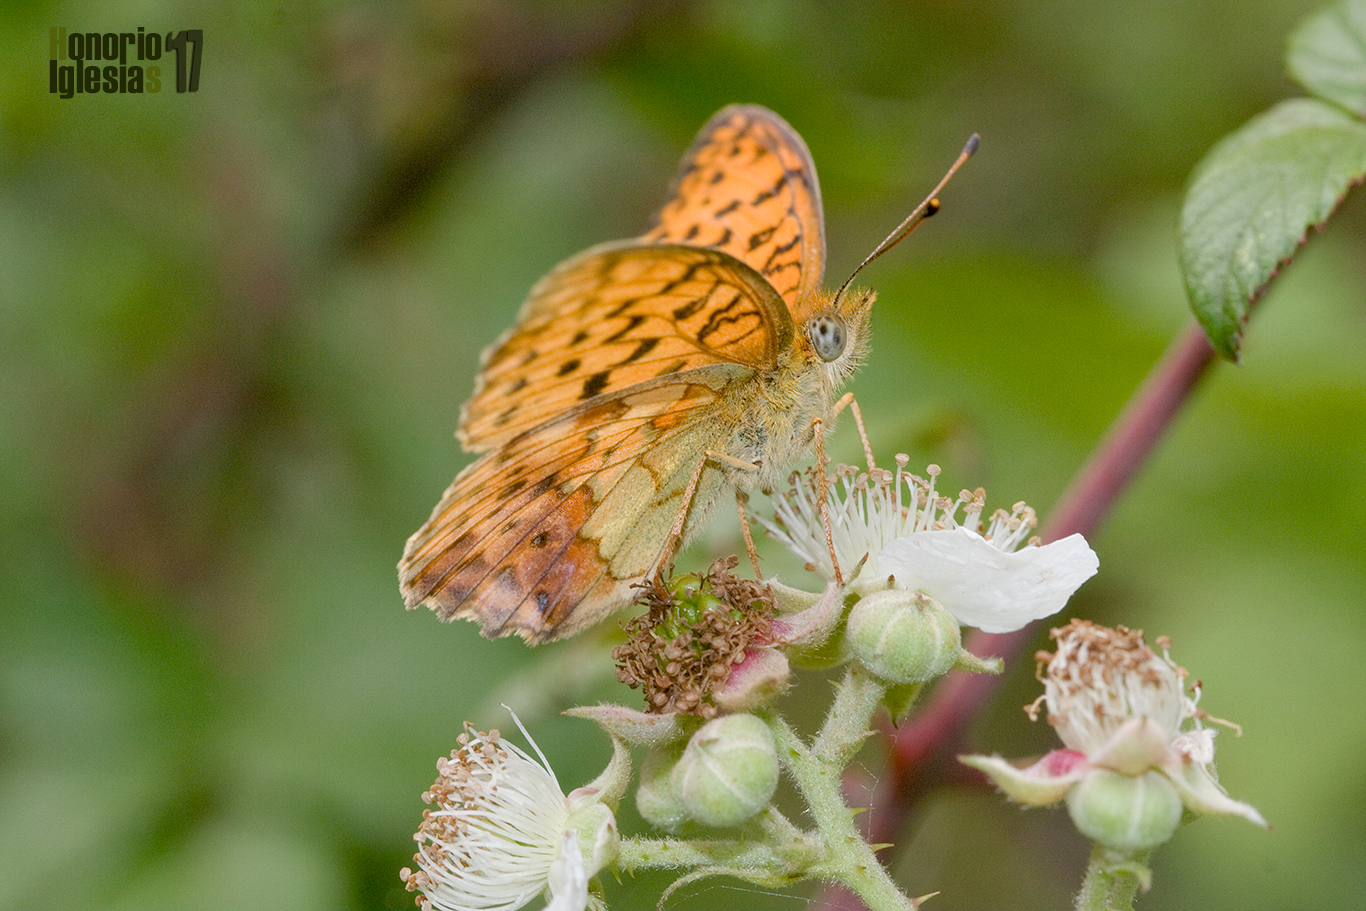 Reverso de mariposa bipunteada dafne o laurel (Brenthis daphne mostrando su reverso alar.